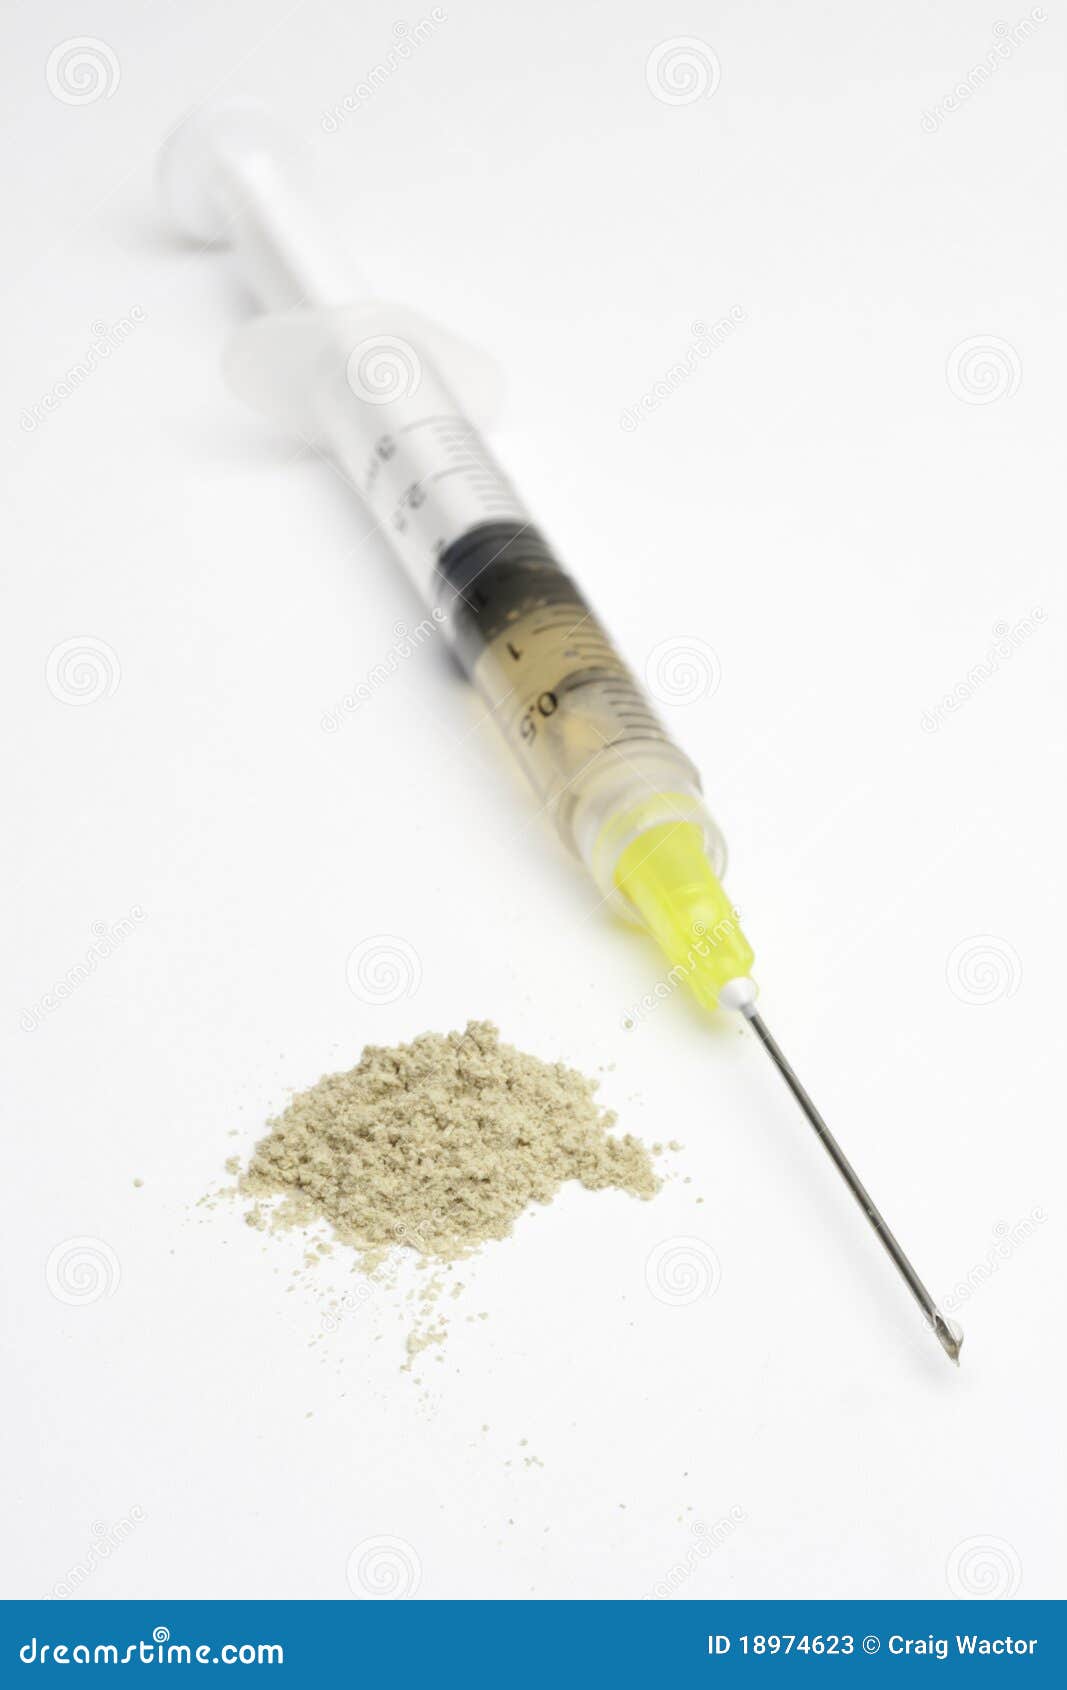 drugs and hypodermic syringe